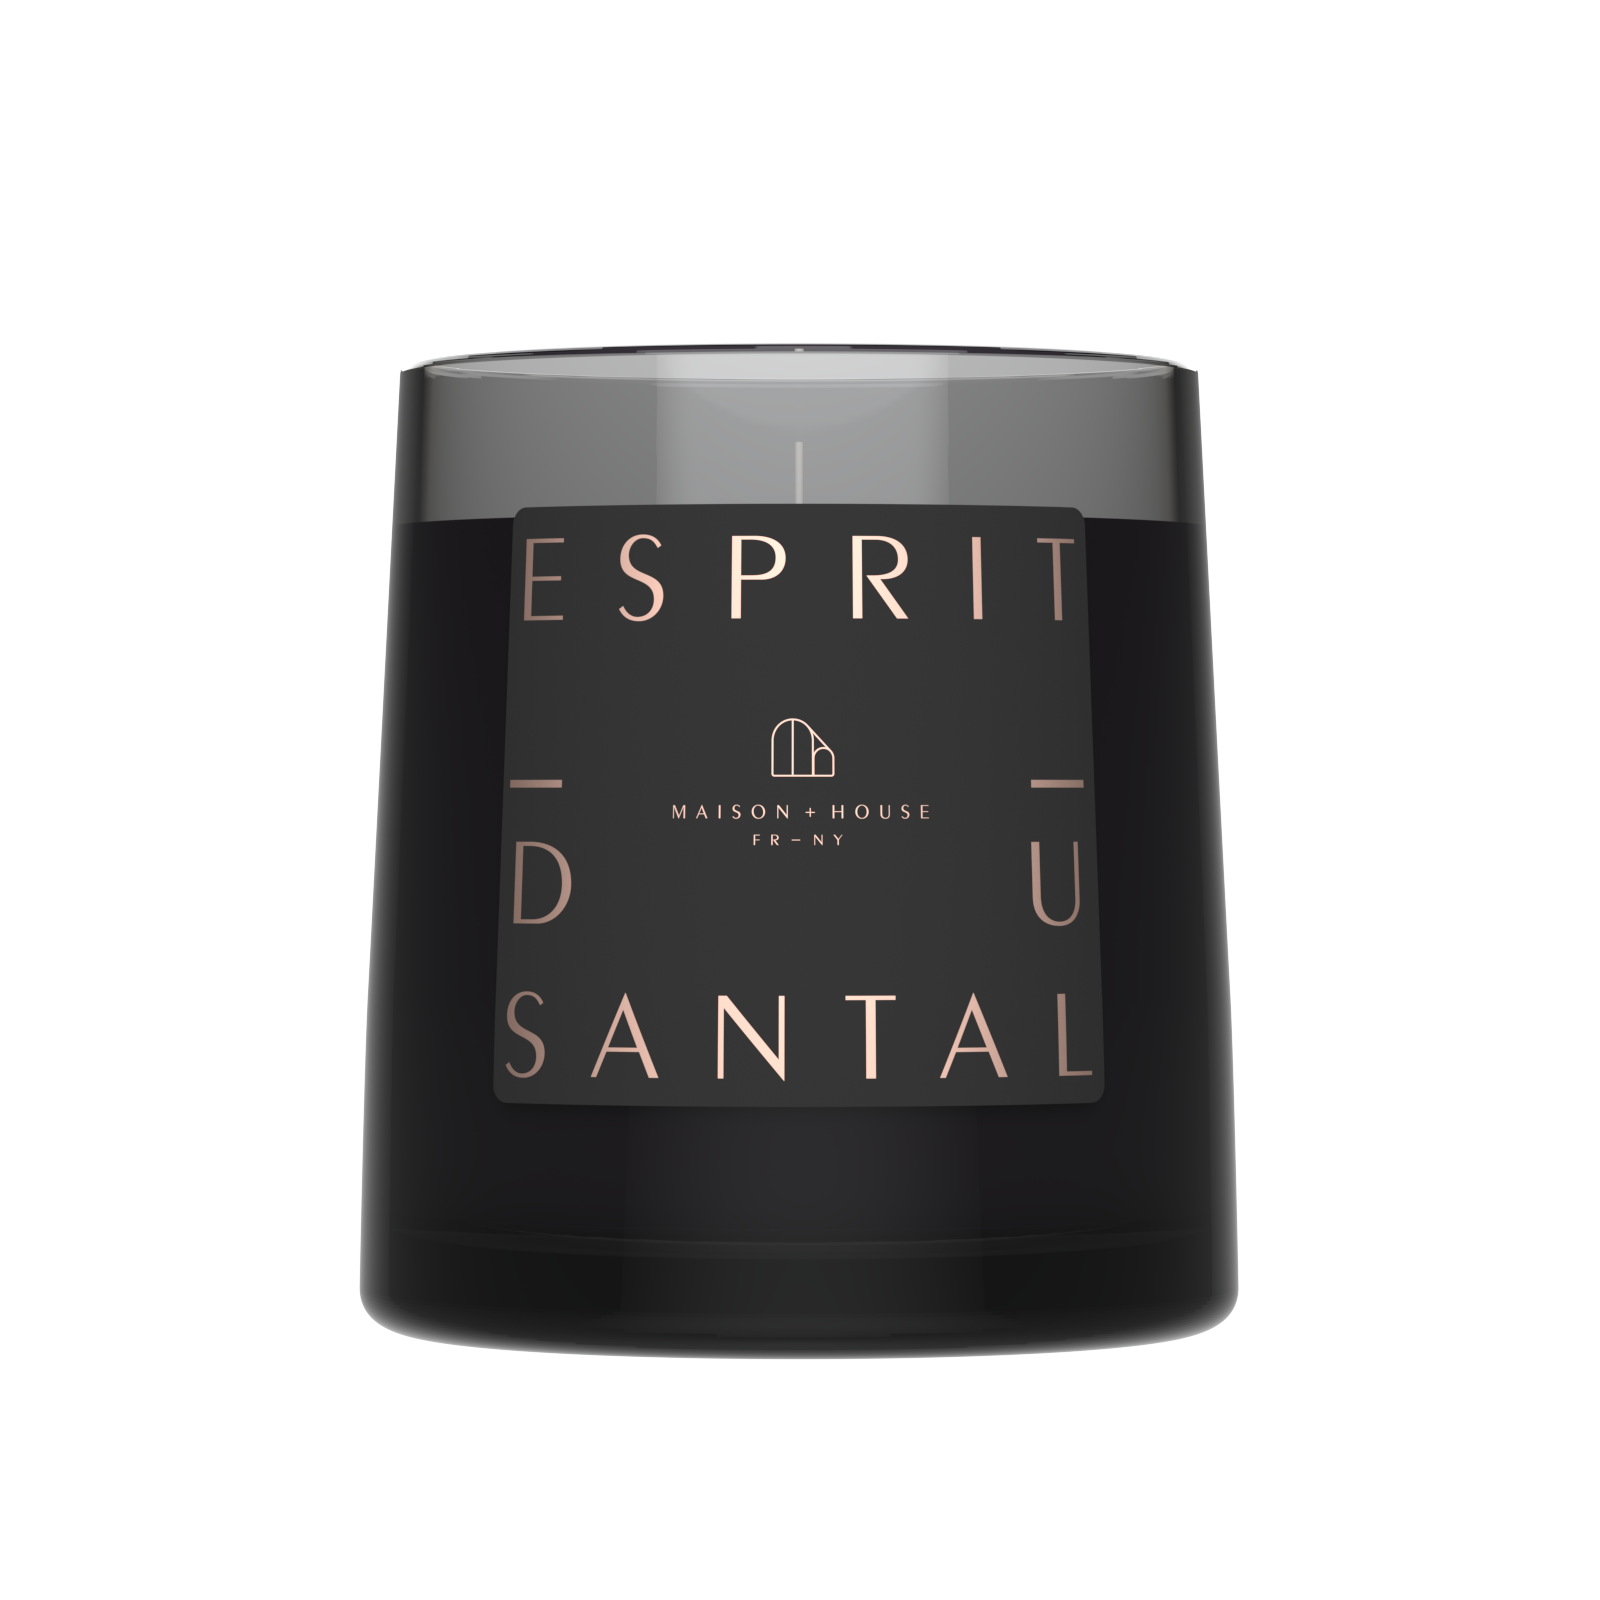 Esprit du Santal Artisanal French-Fragrance Candle